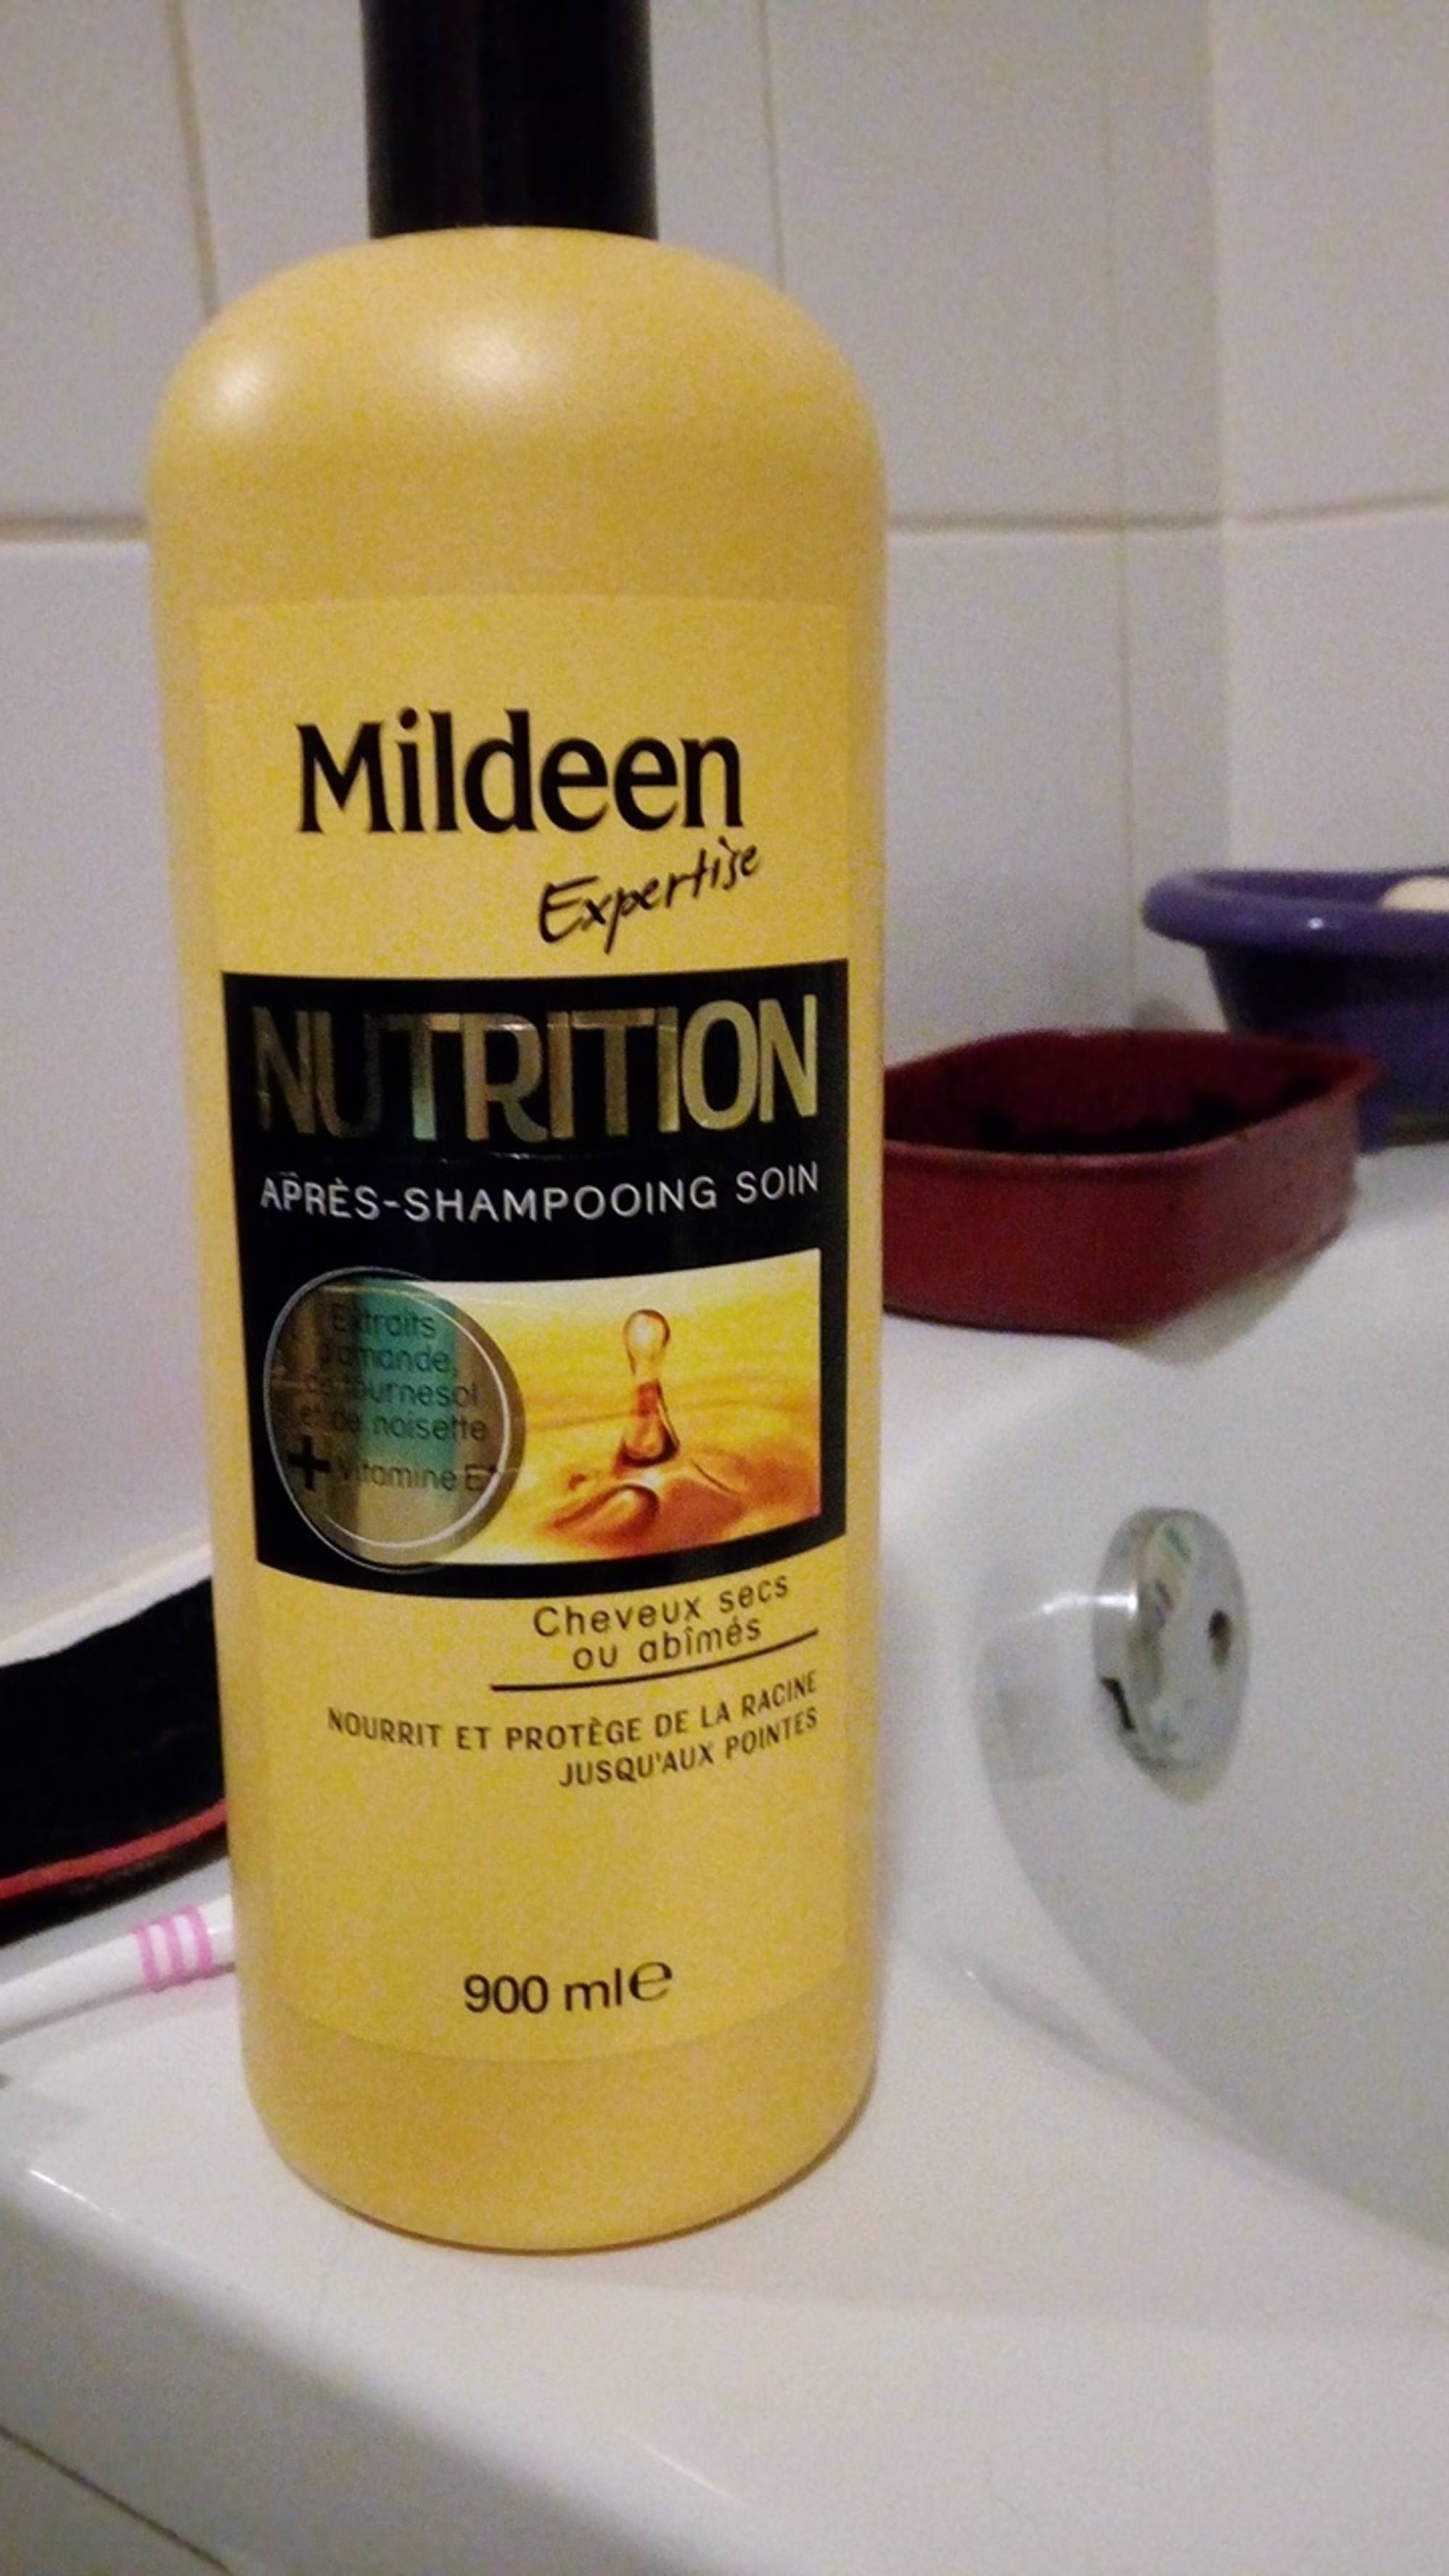 MILDEEN EXPERTISE - Nutrition - Après-shampooing soin